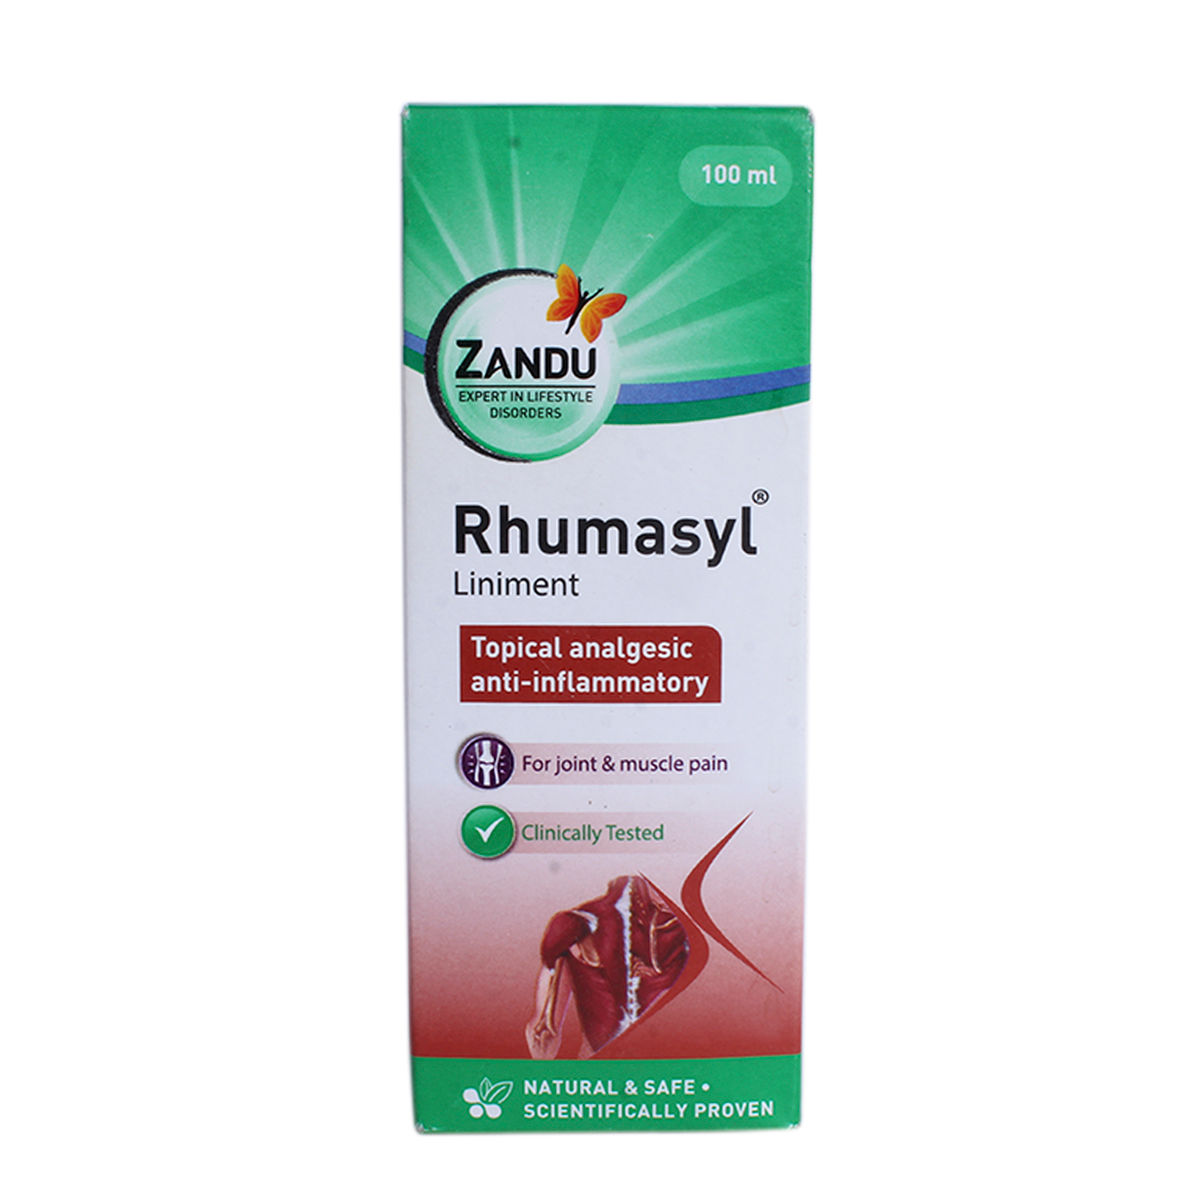 Zandu Rhumasyl Liniment 100 ml, Pack of 1 